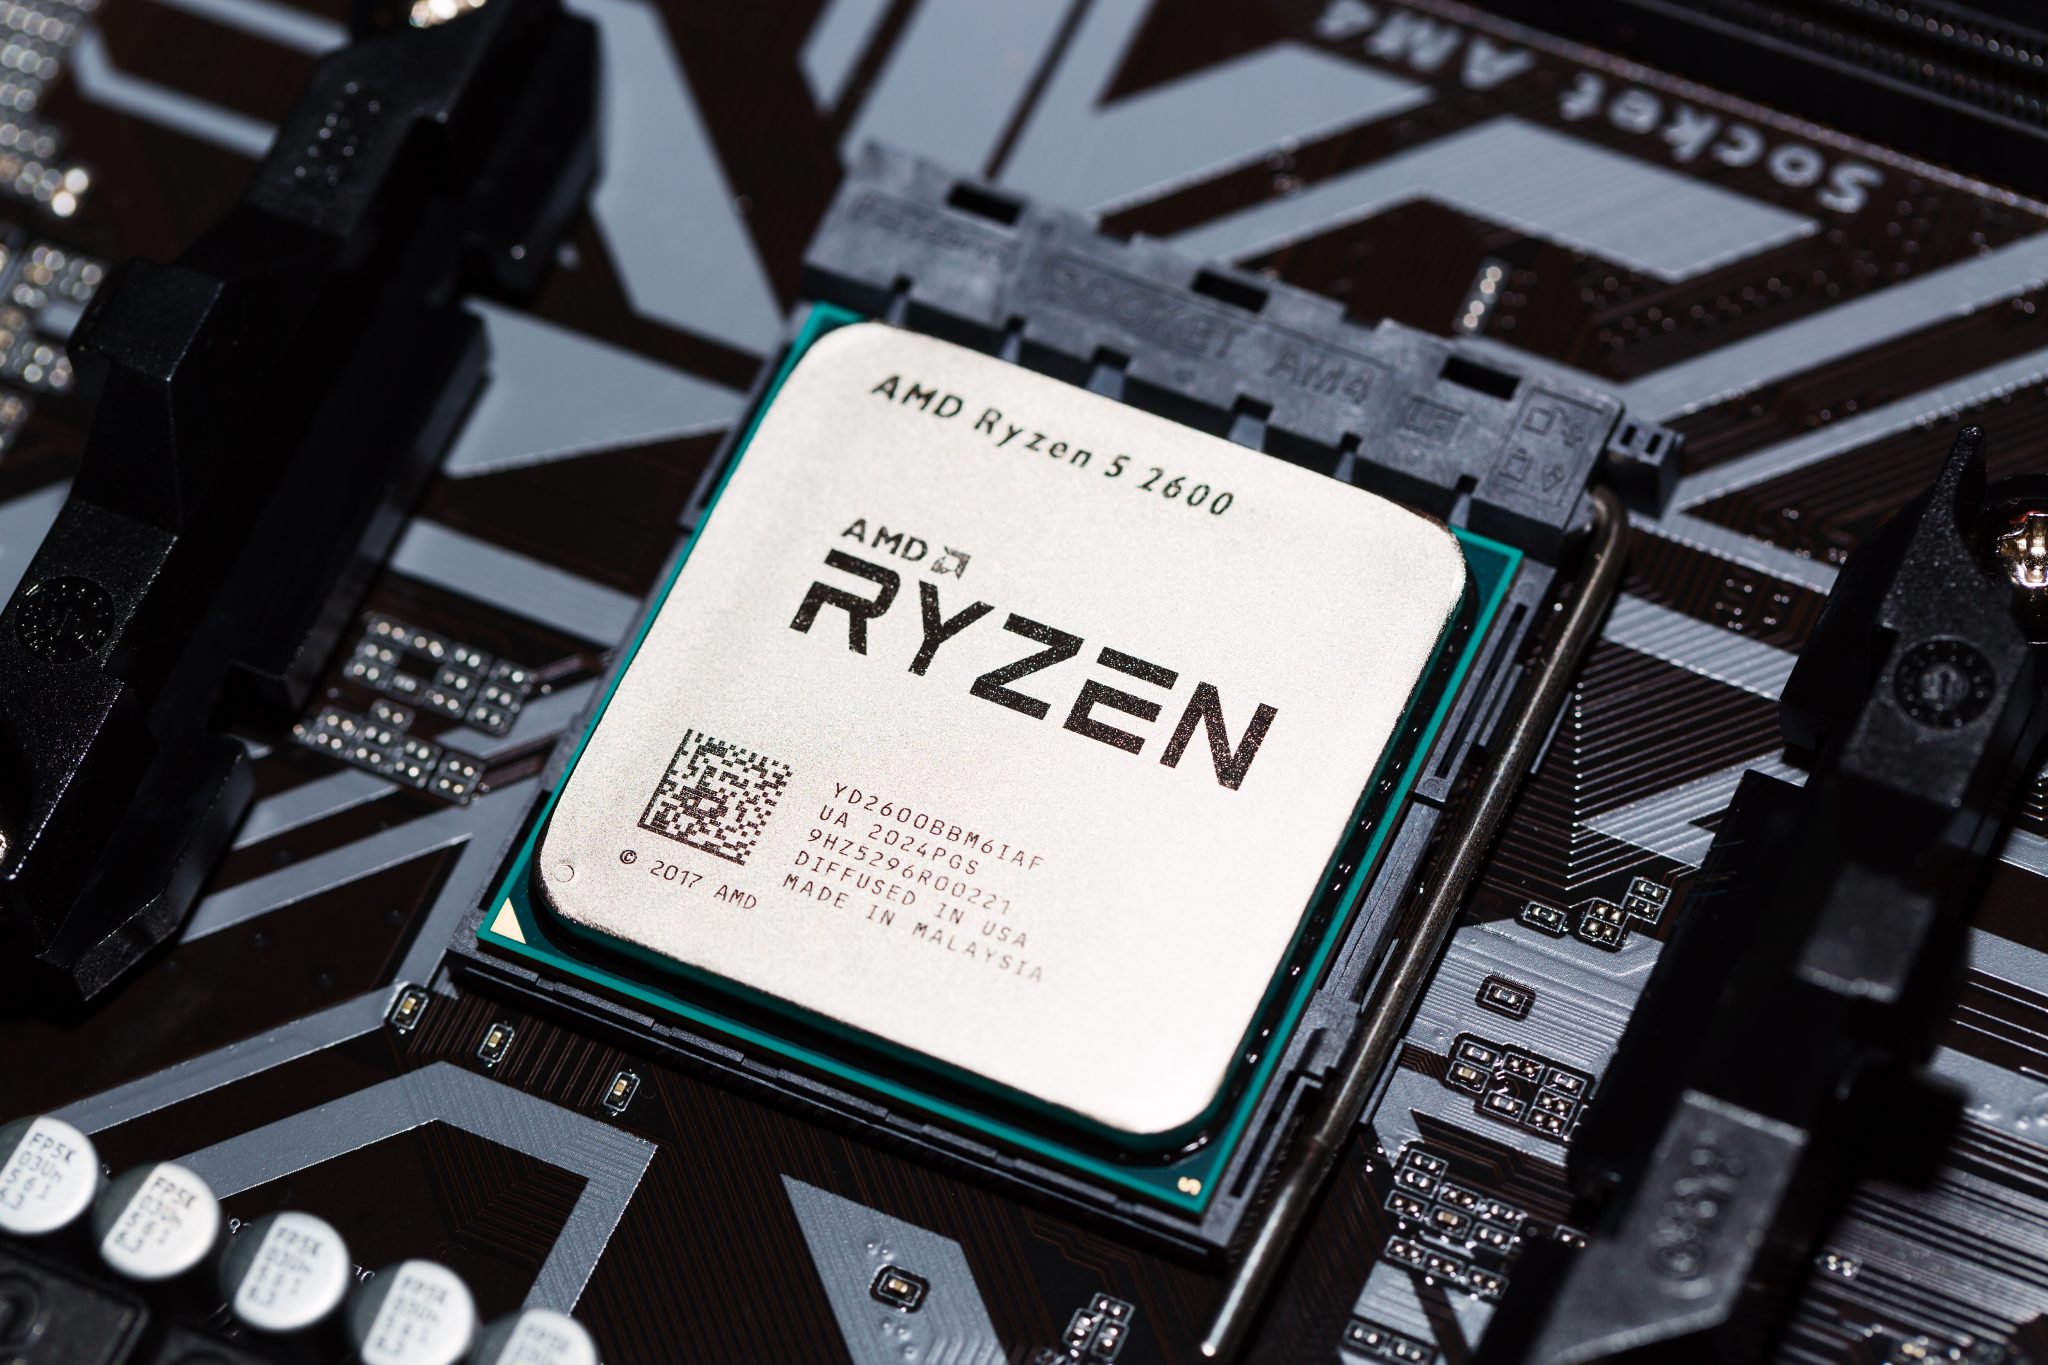 Ryzen 2600 память. AMD Ryzen 5 2600. AMD Ryzen 5 2600 Six-Core Processor. Сокет AMD Ryzen 5. Hexa Core Ryzen 5 2600.